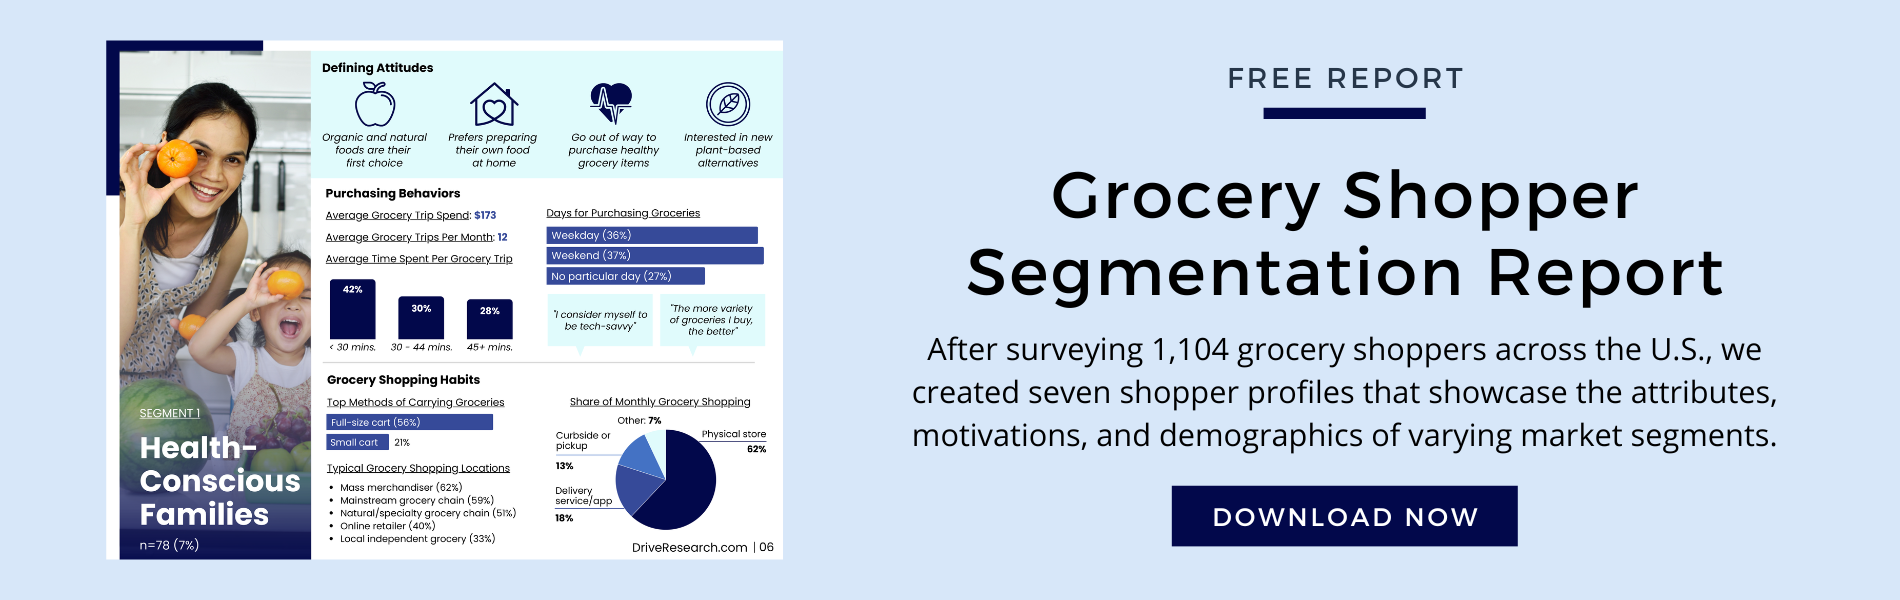 grocery shopper segmentation report download CTA